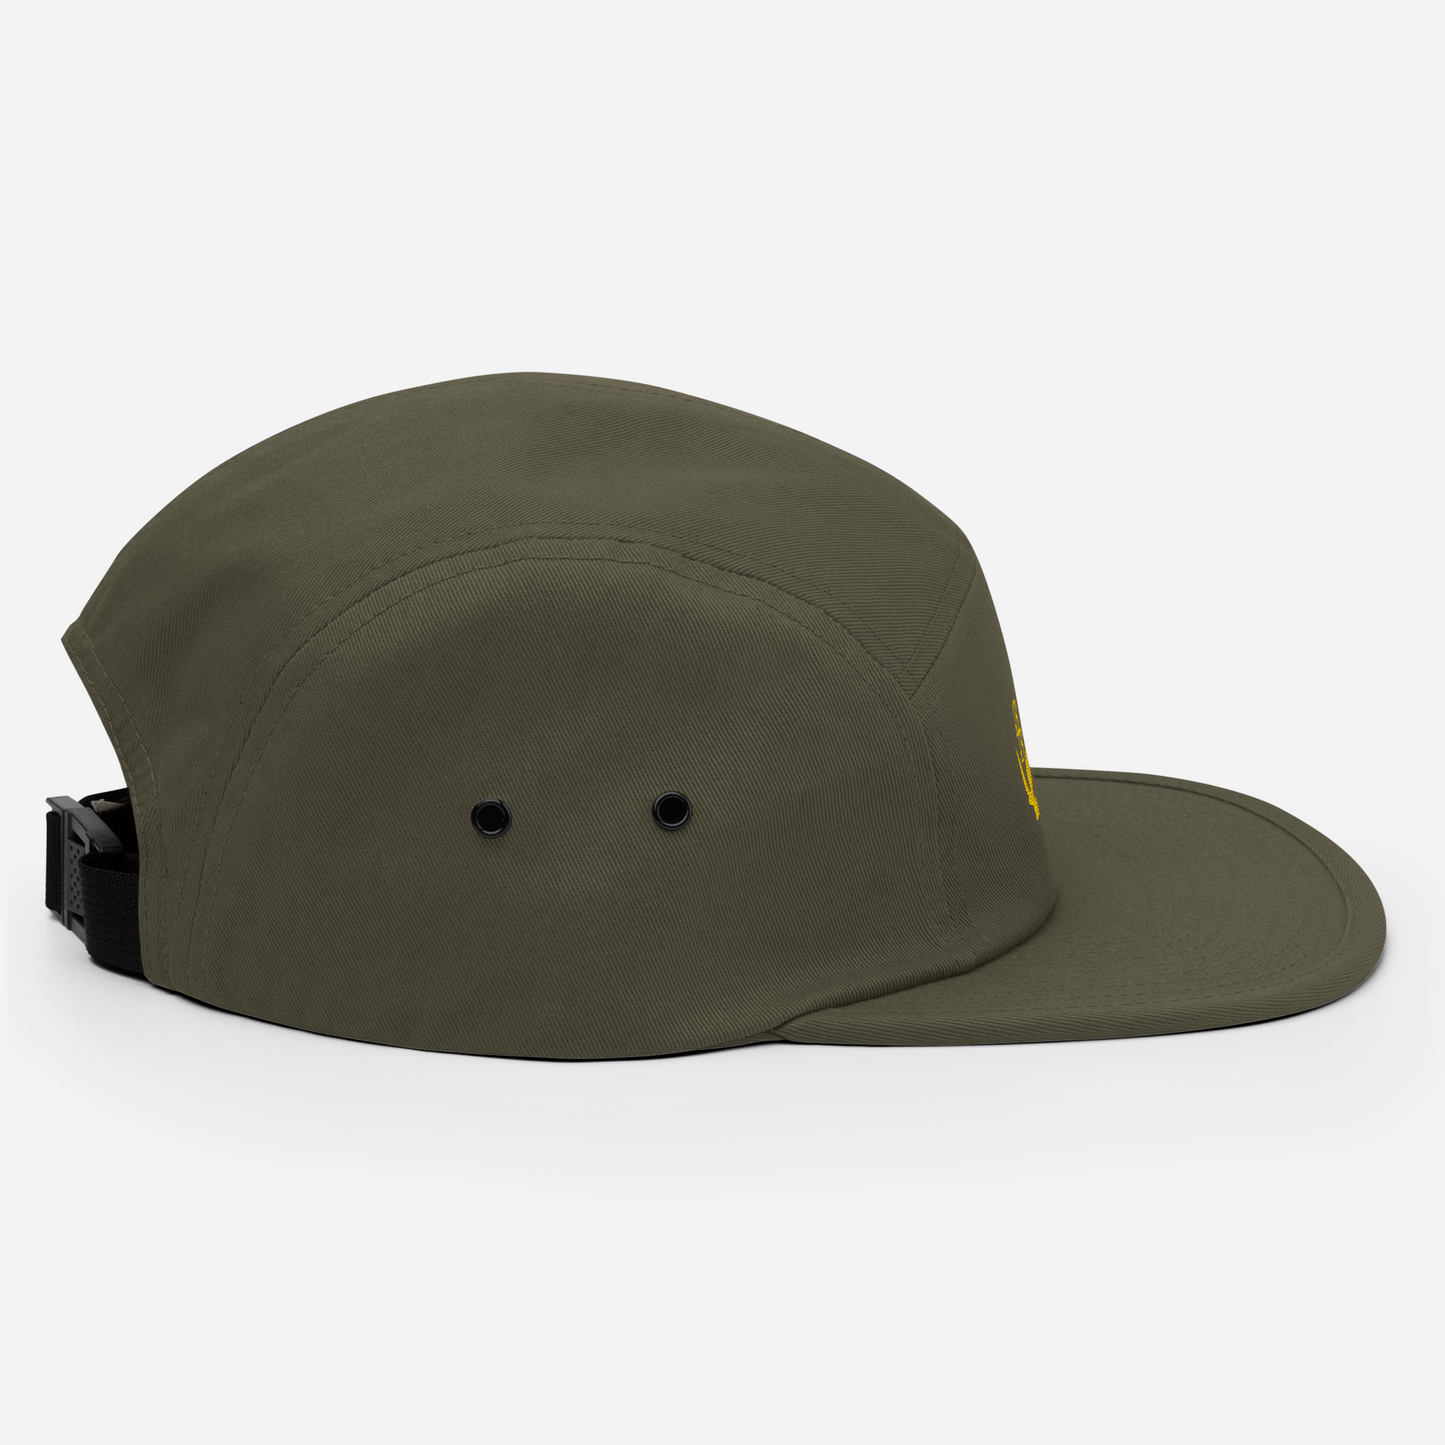 The Stealth cap